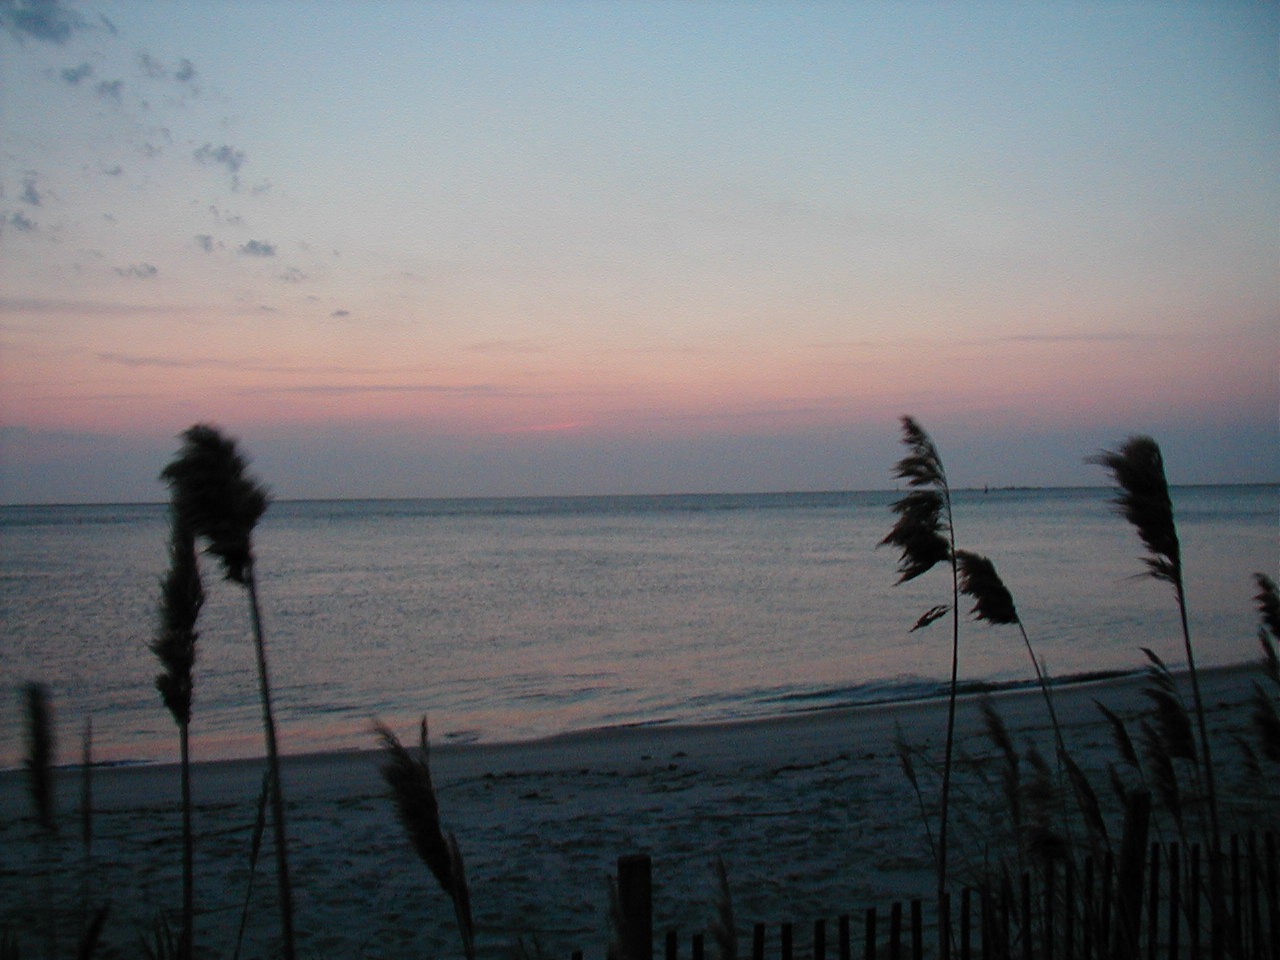 sunrise at caswell beach, nc, usa